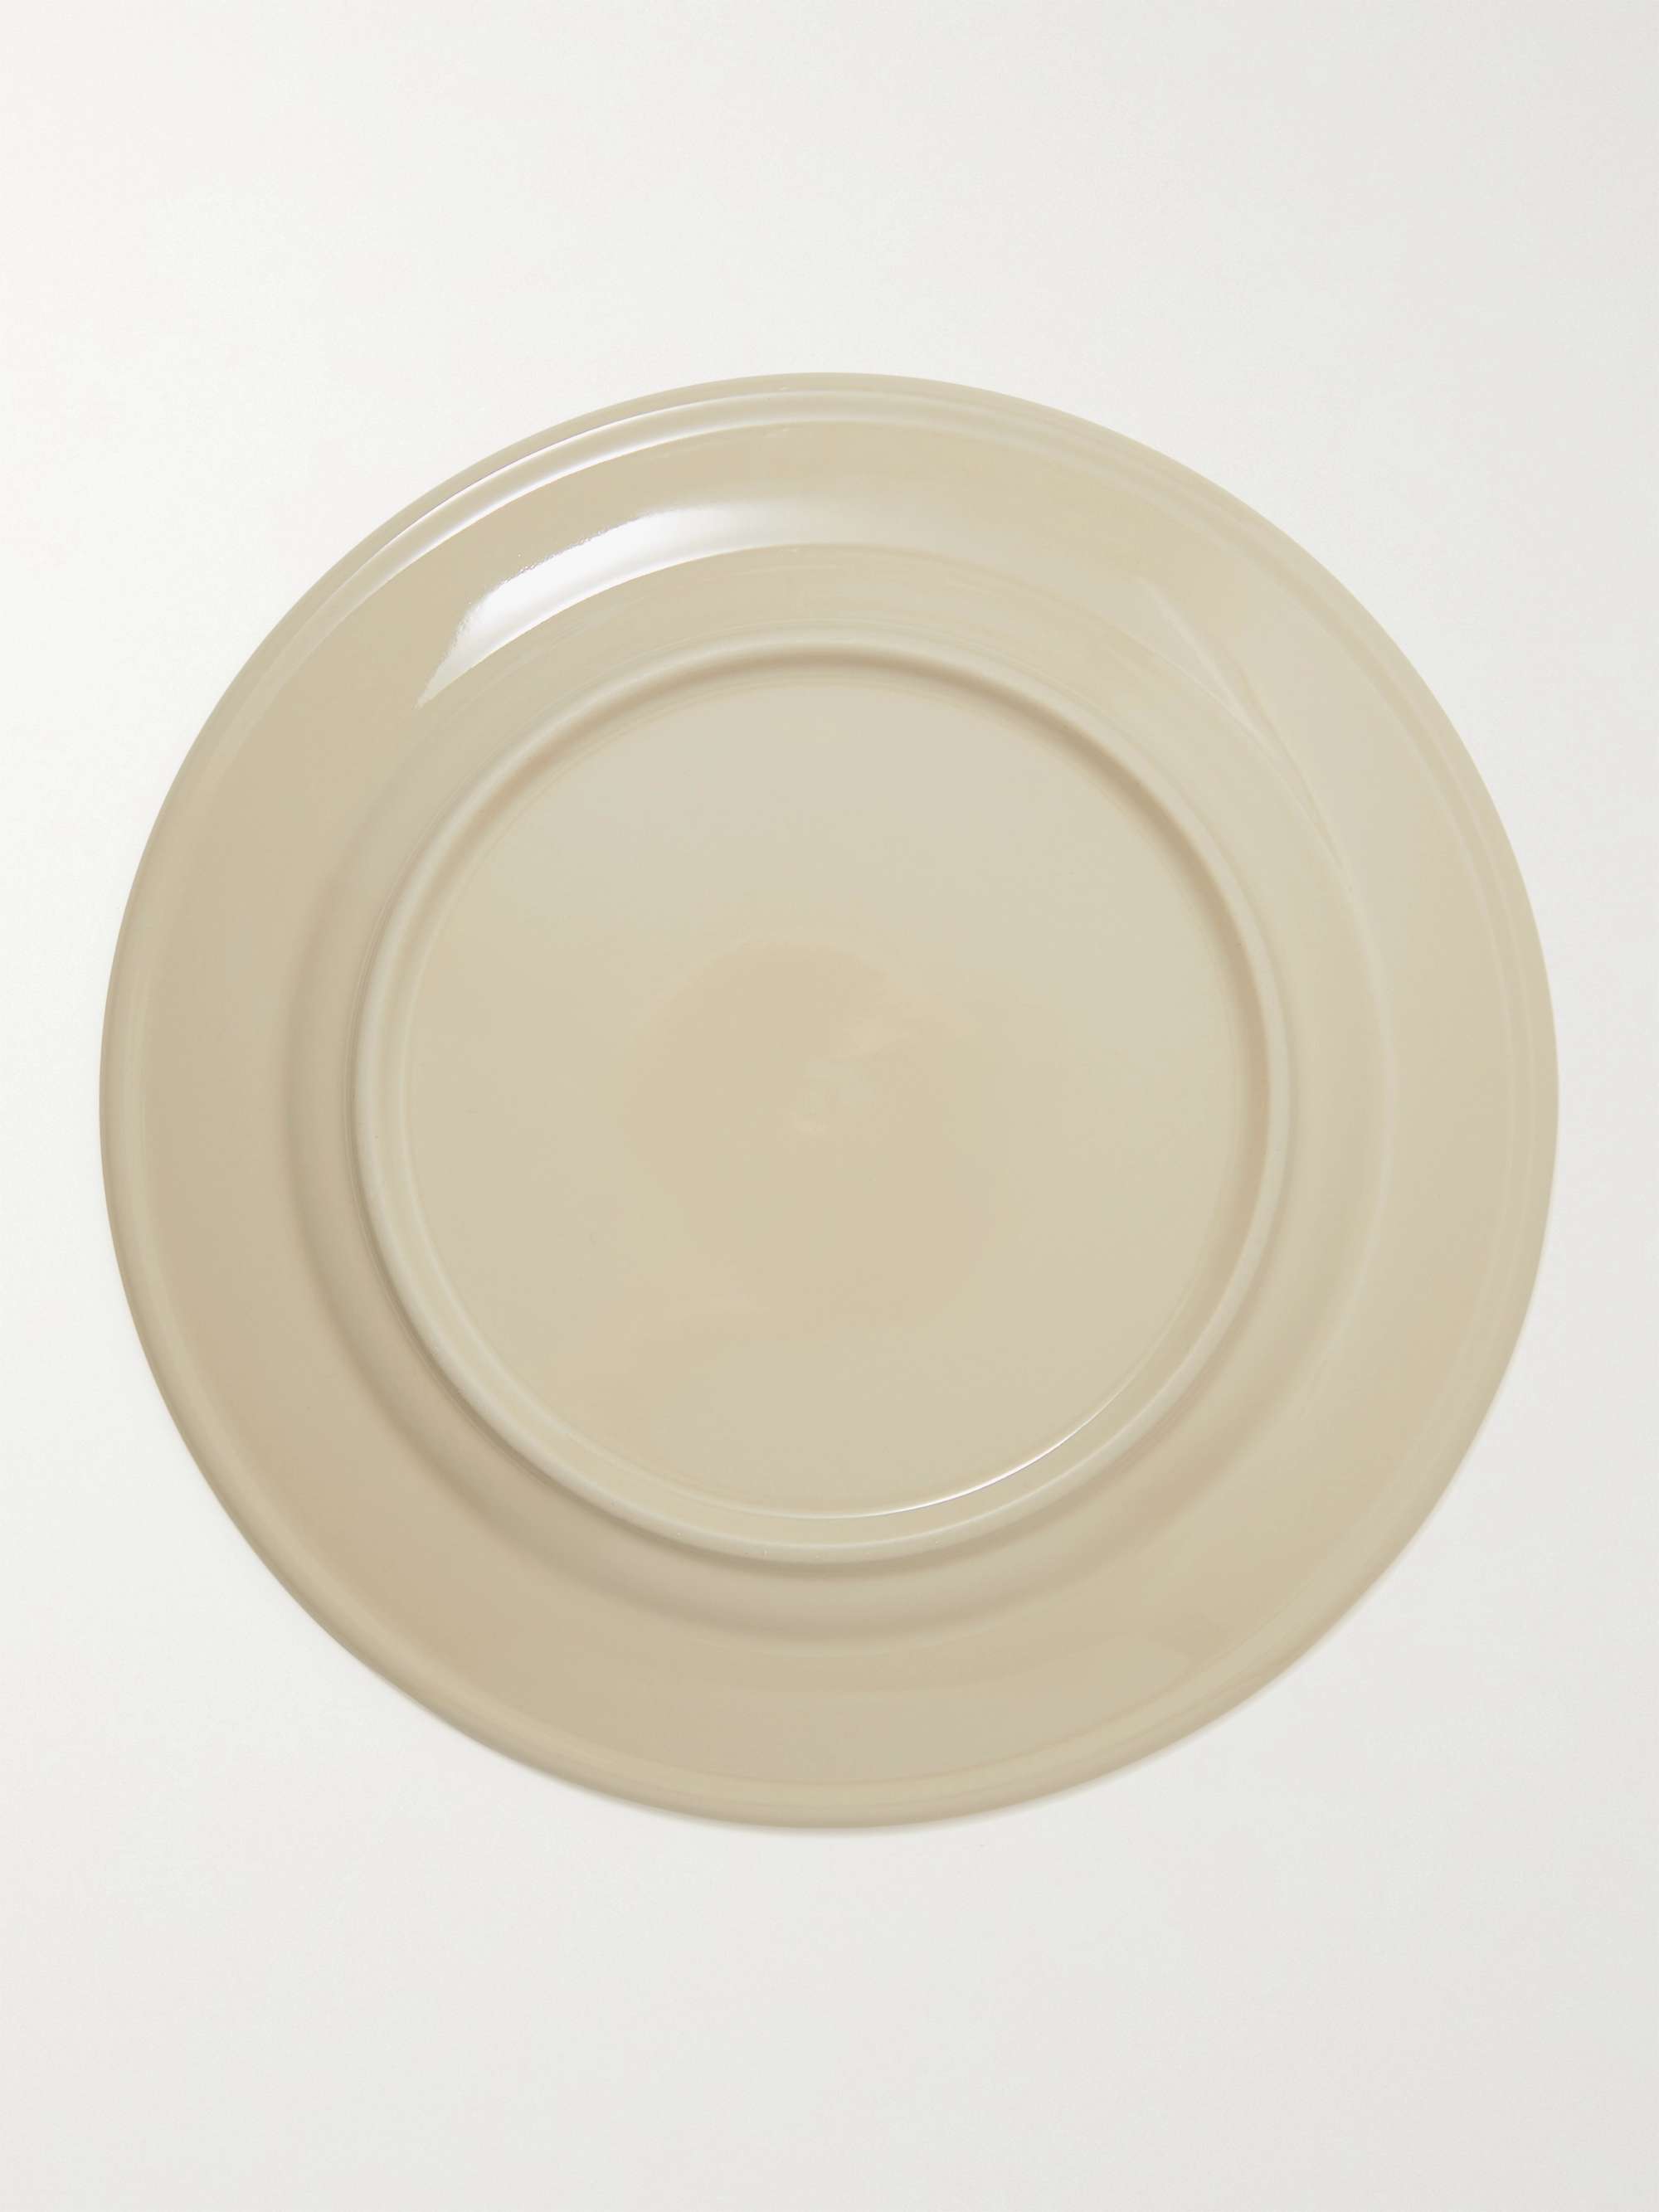 RRL Set of Four Logo-Print Ceramic Plates